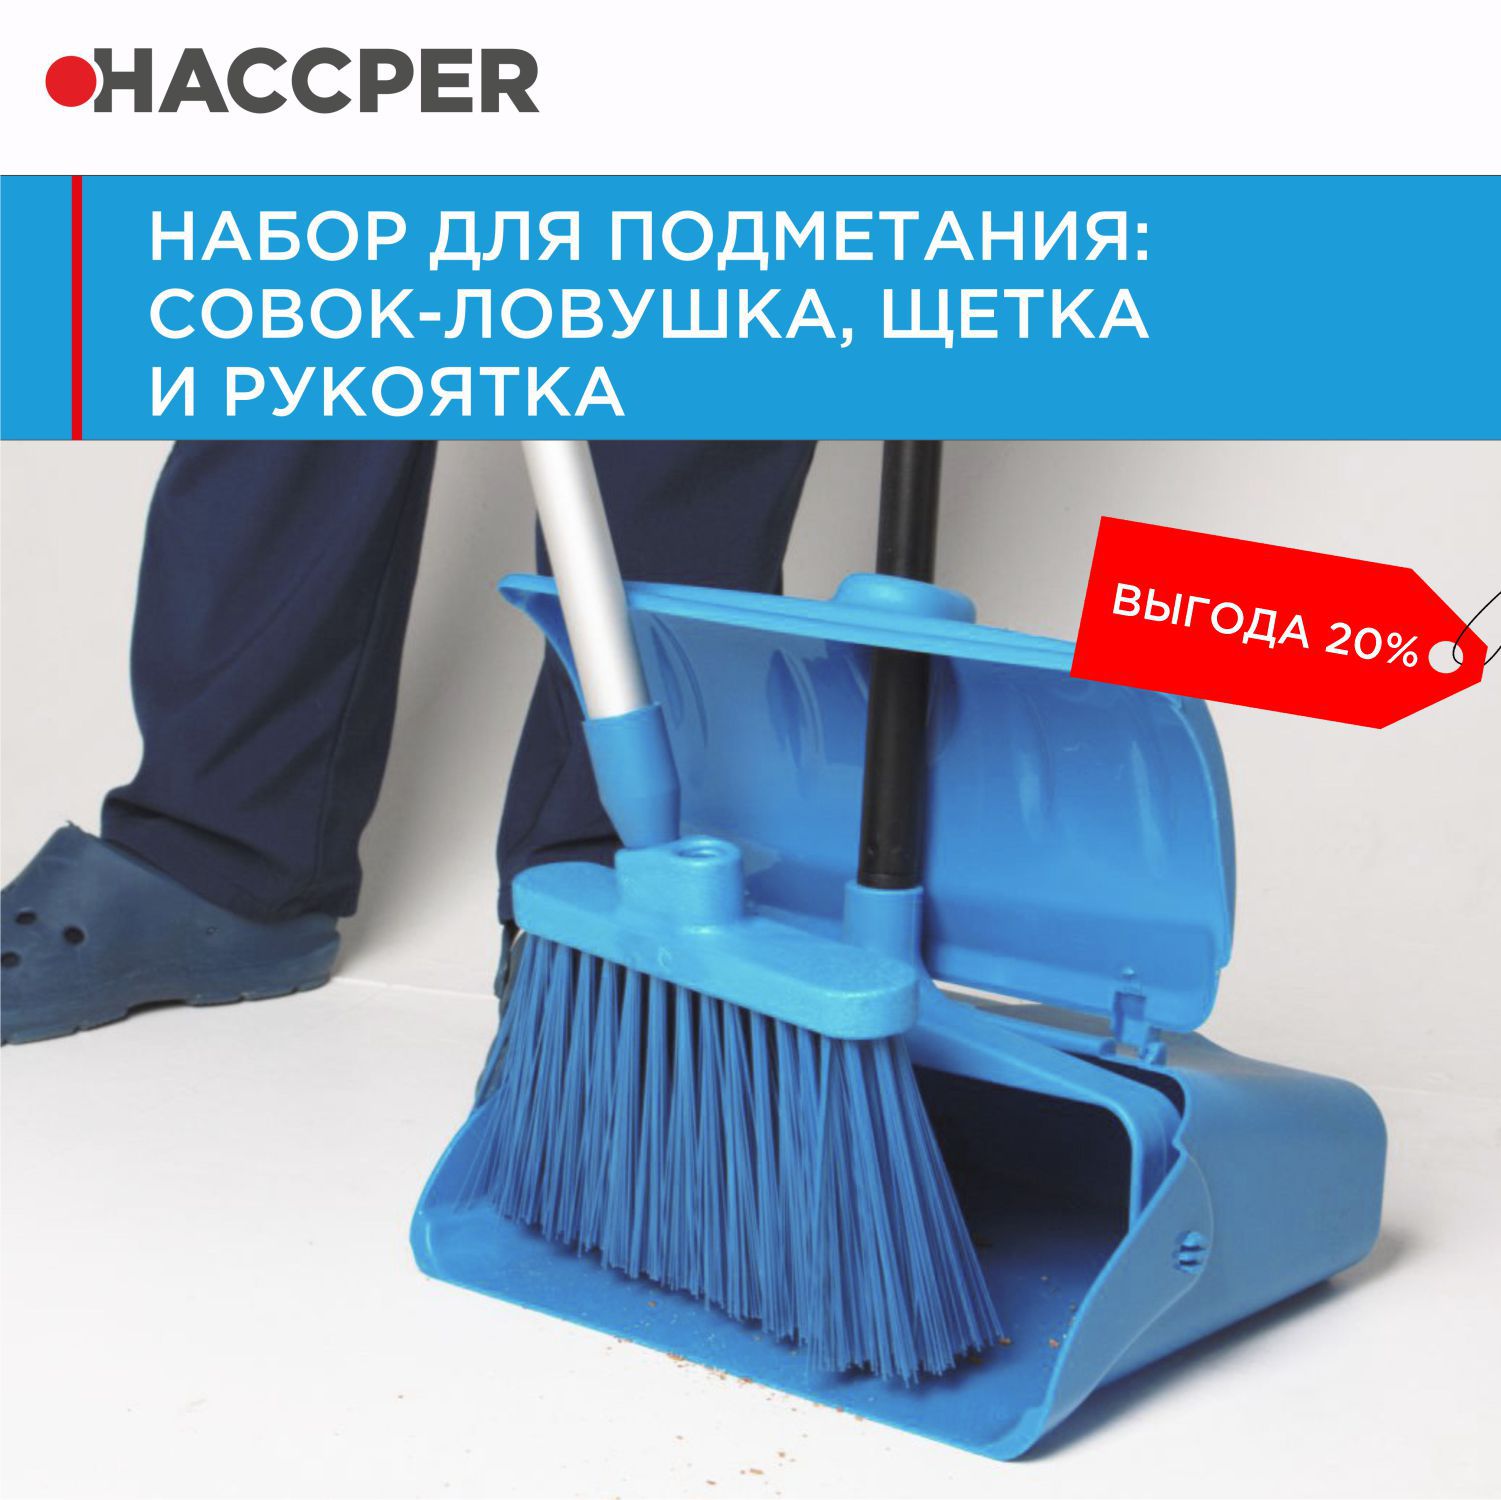 Набор для подметания HACCPER совок-ловушка, щетка и рукоятка, синий